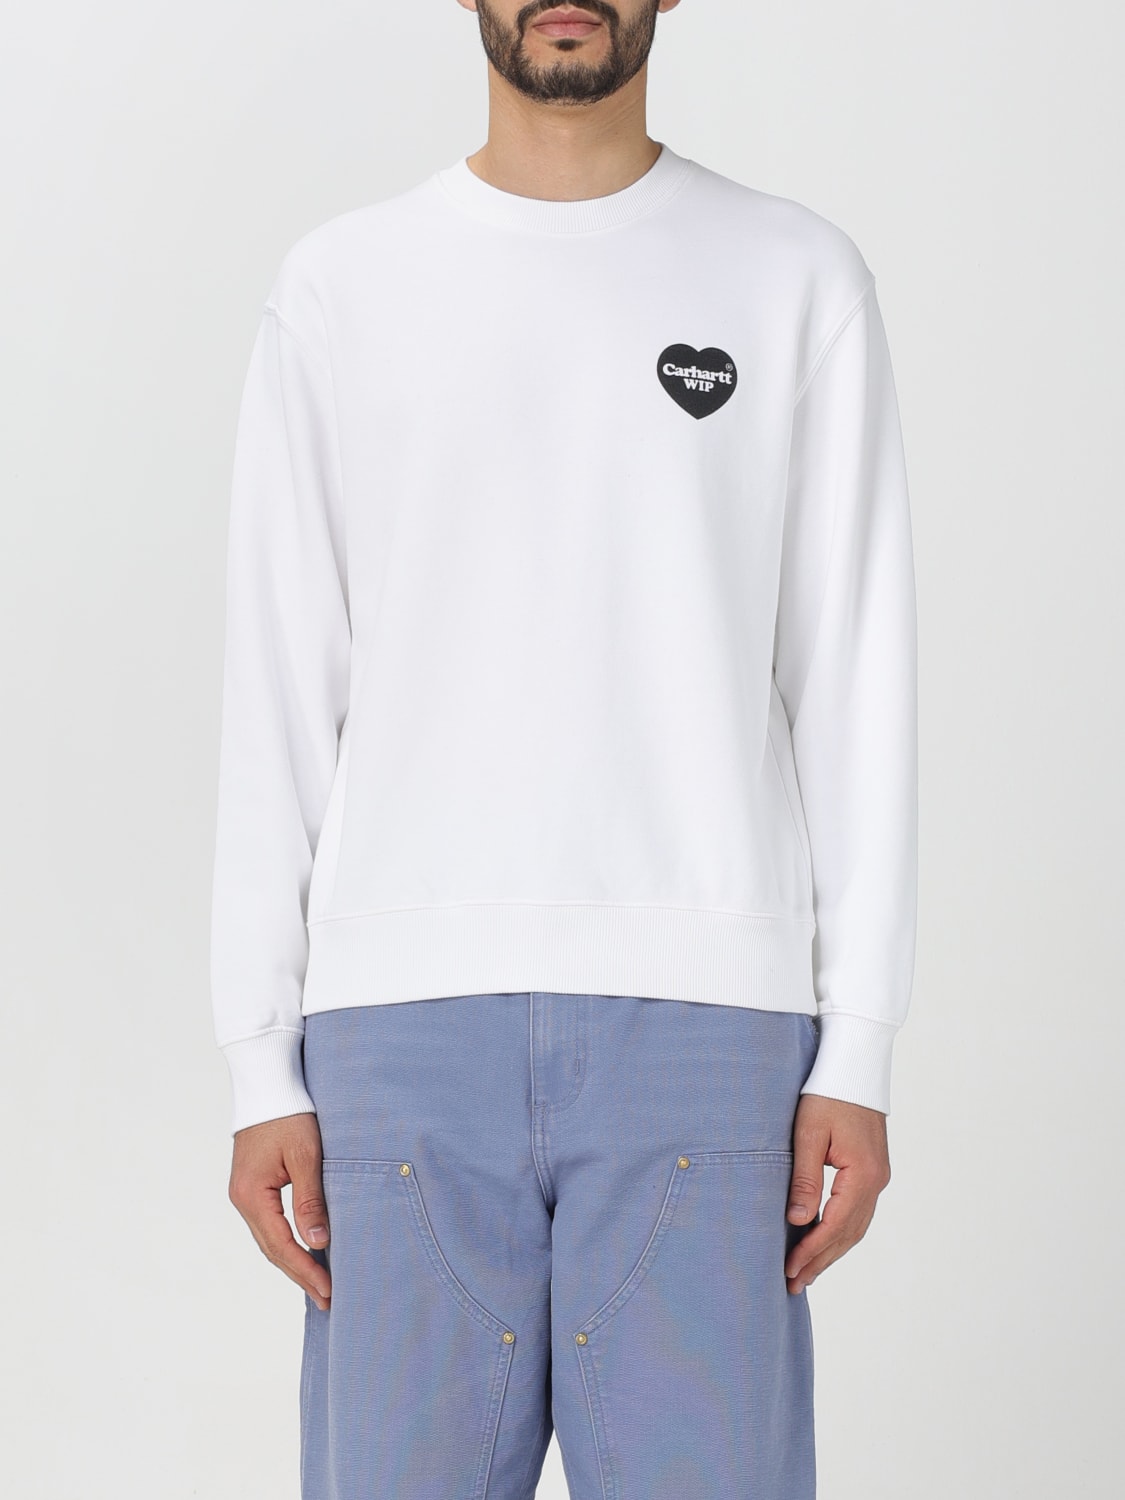 CARHARTT WIP: Sweatshirt homme - Blanc  Sweatshirt Carhartt Wip I02941703  en ligne sur